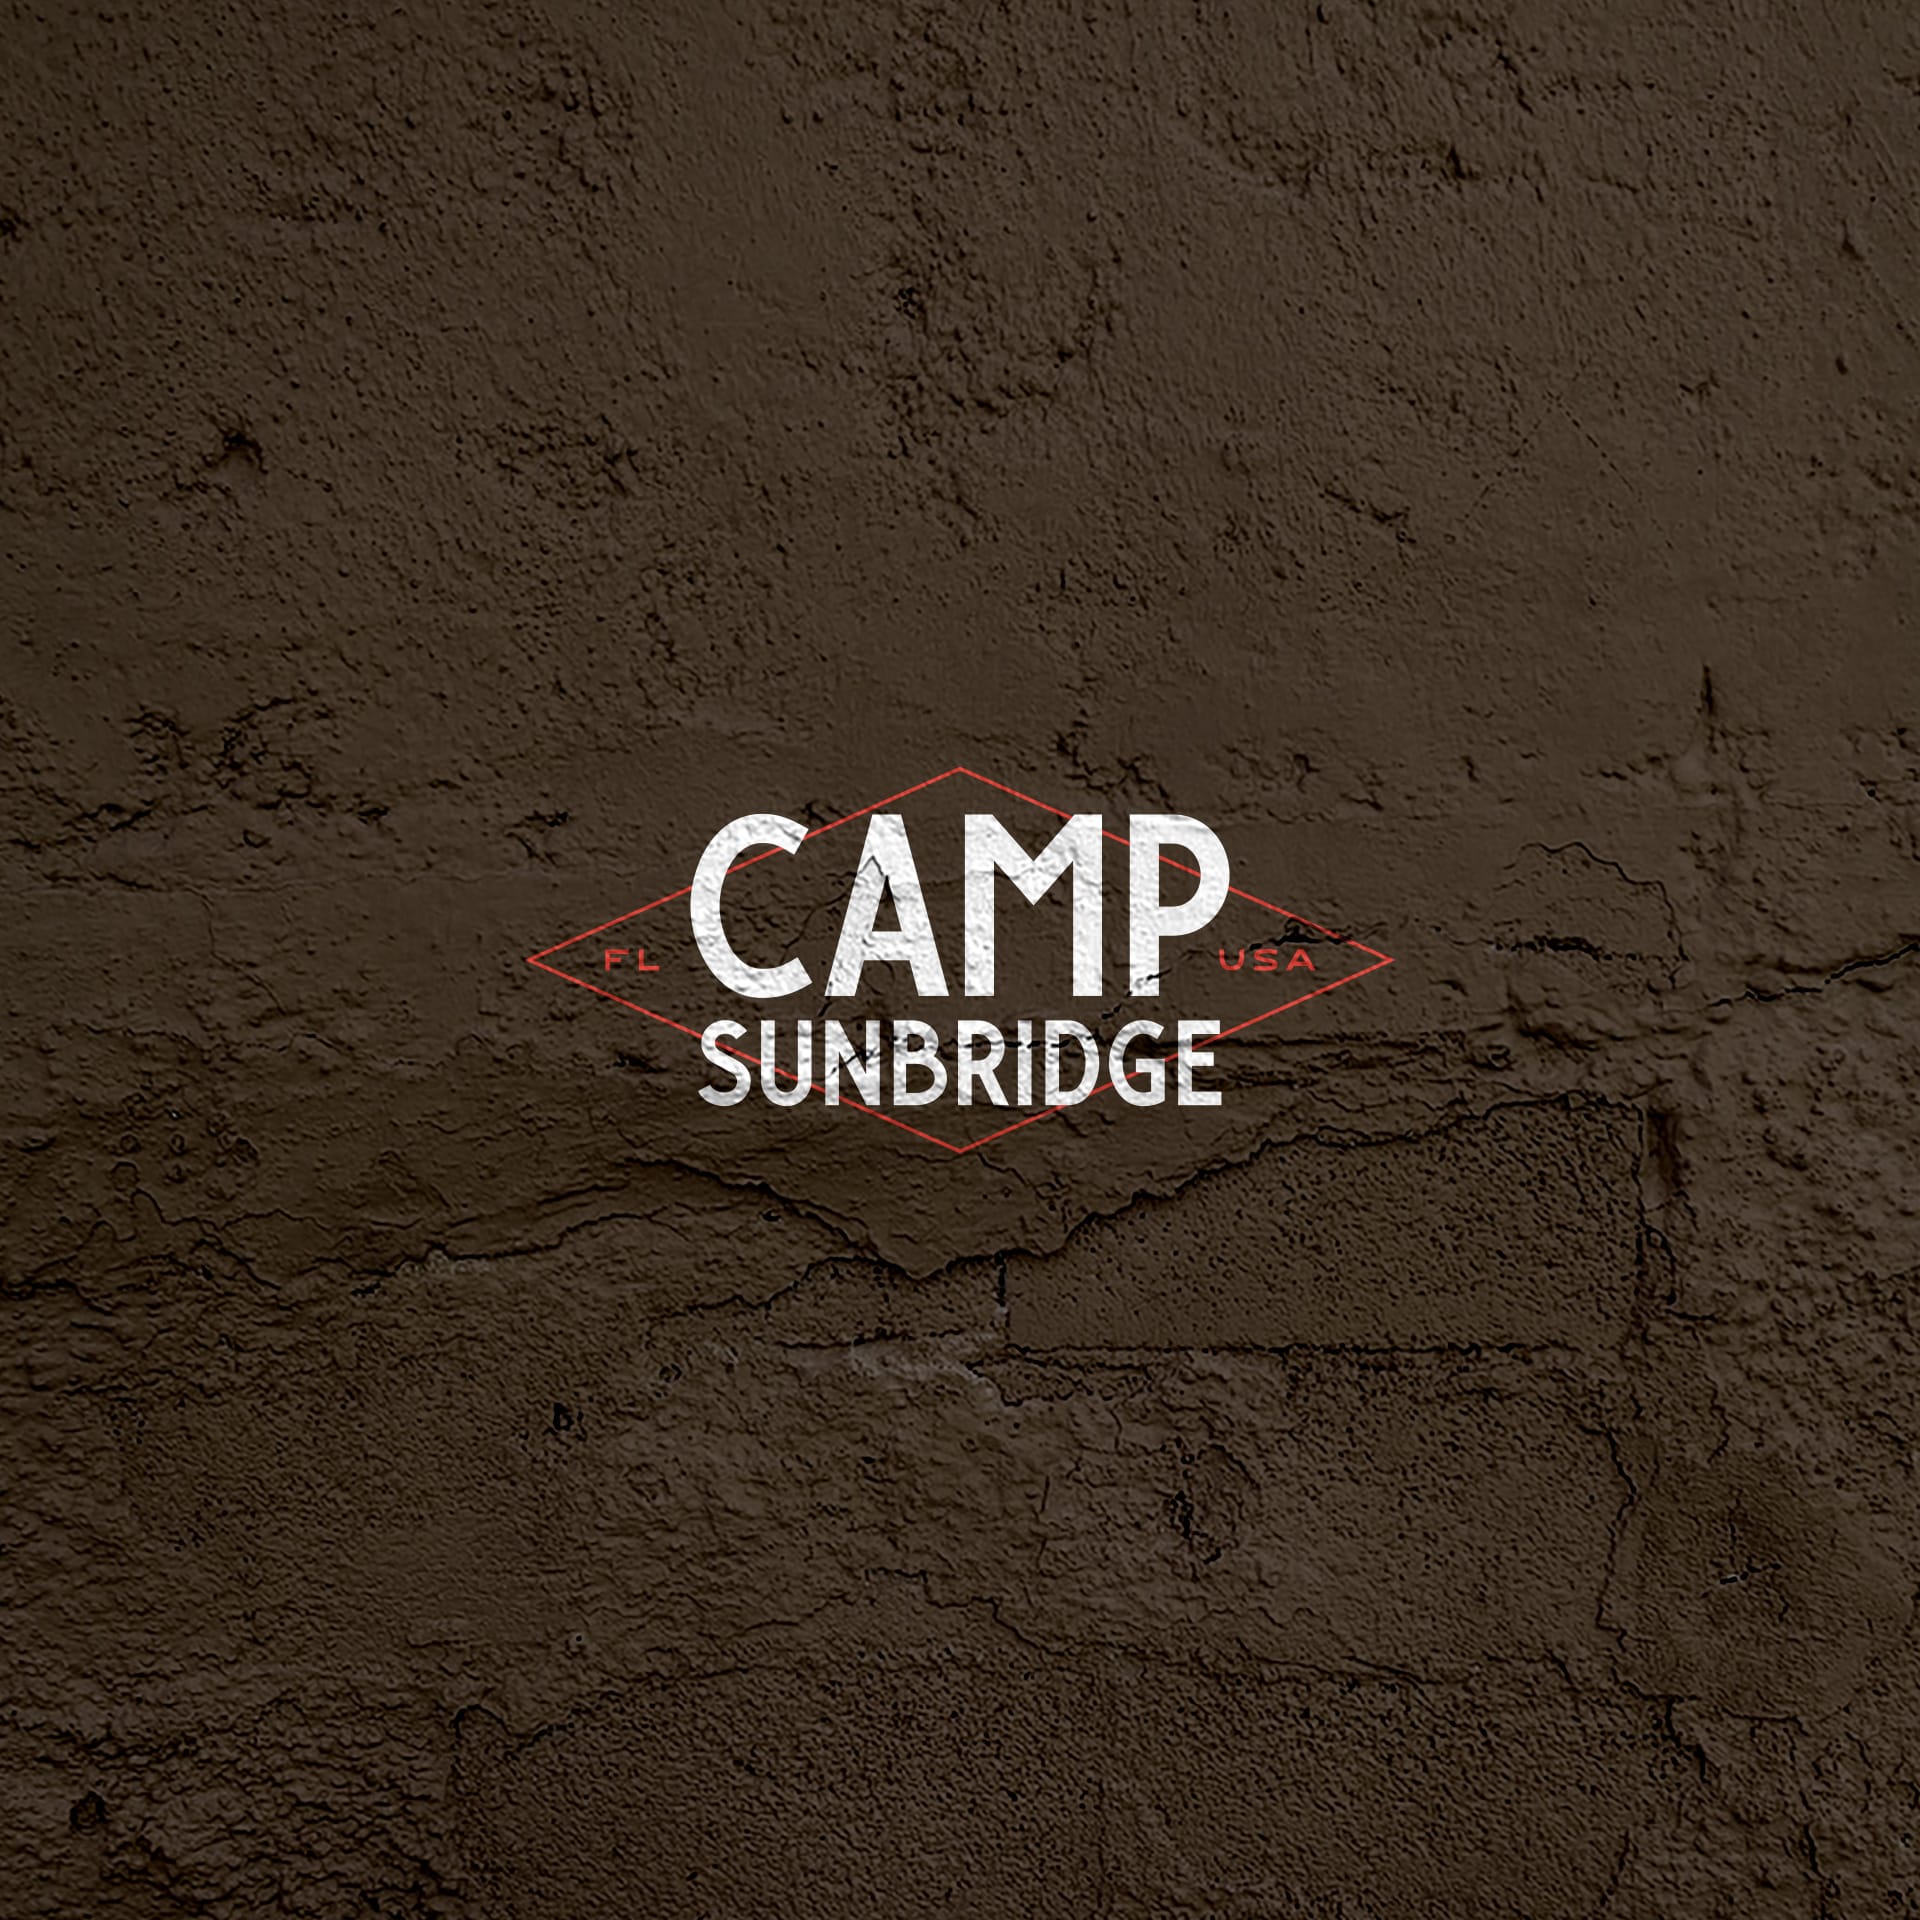 The Camp Sunbridge logo laid over a dark brown background